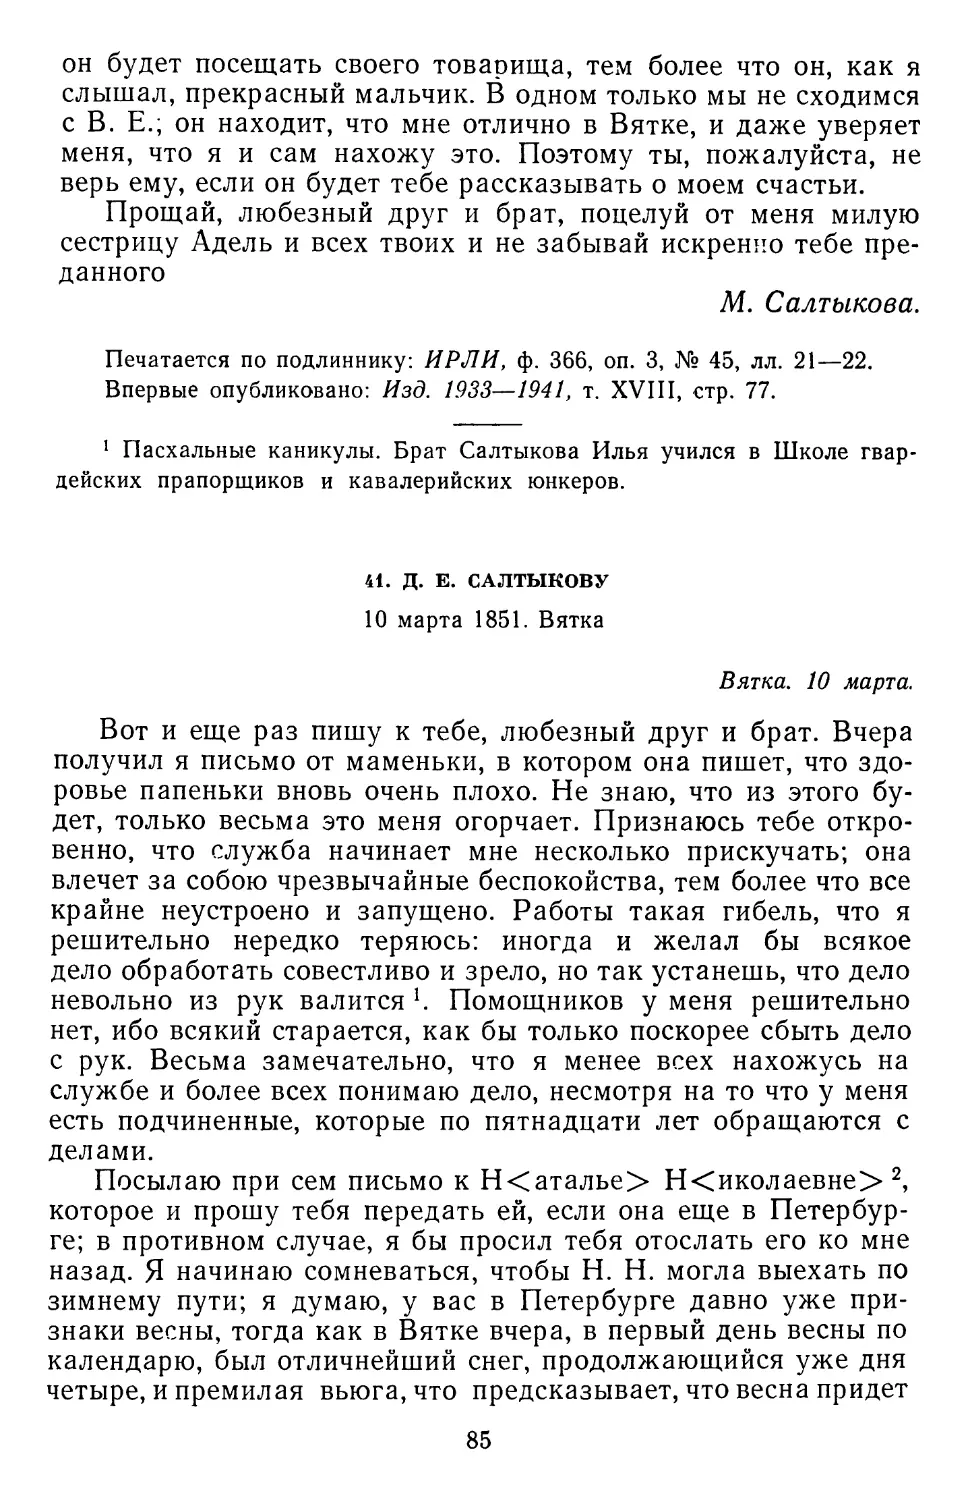 41.Д. Е. Салтыкову. 10 марта 1851.Вятка